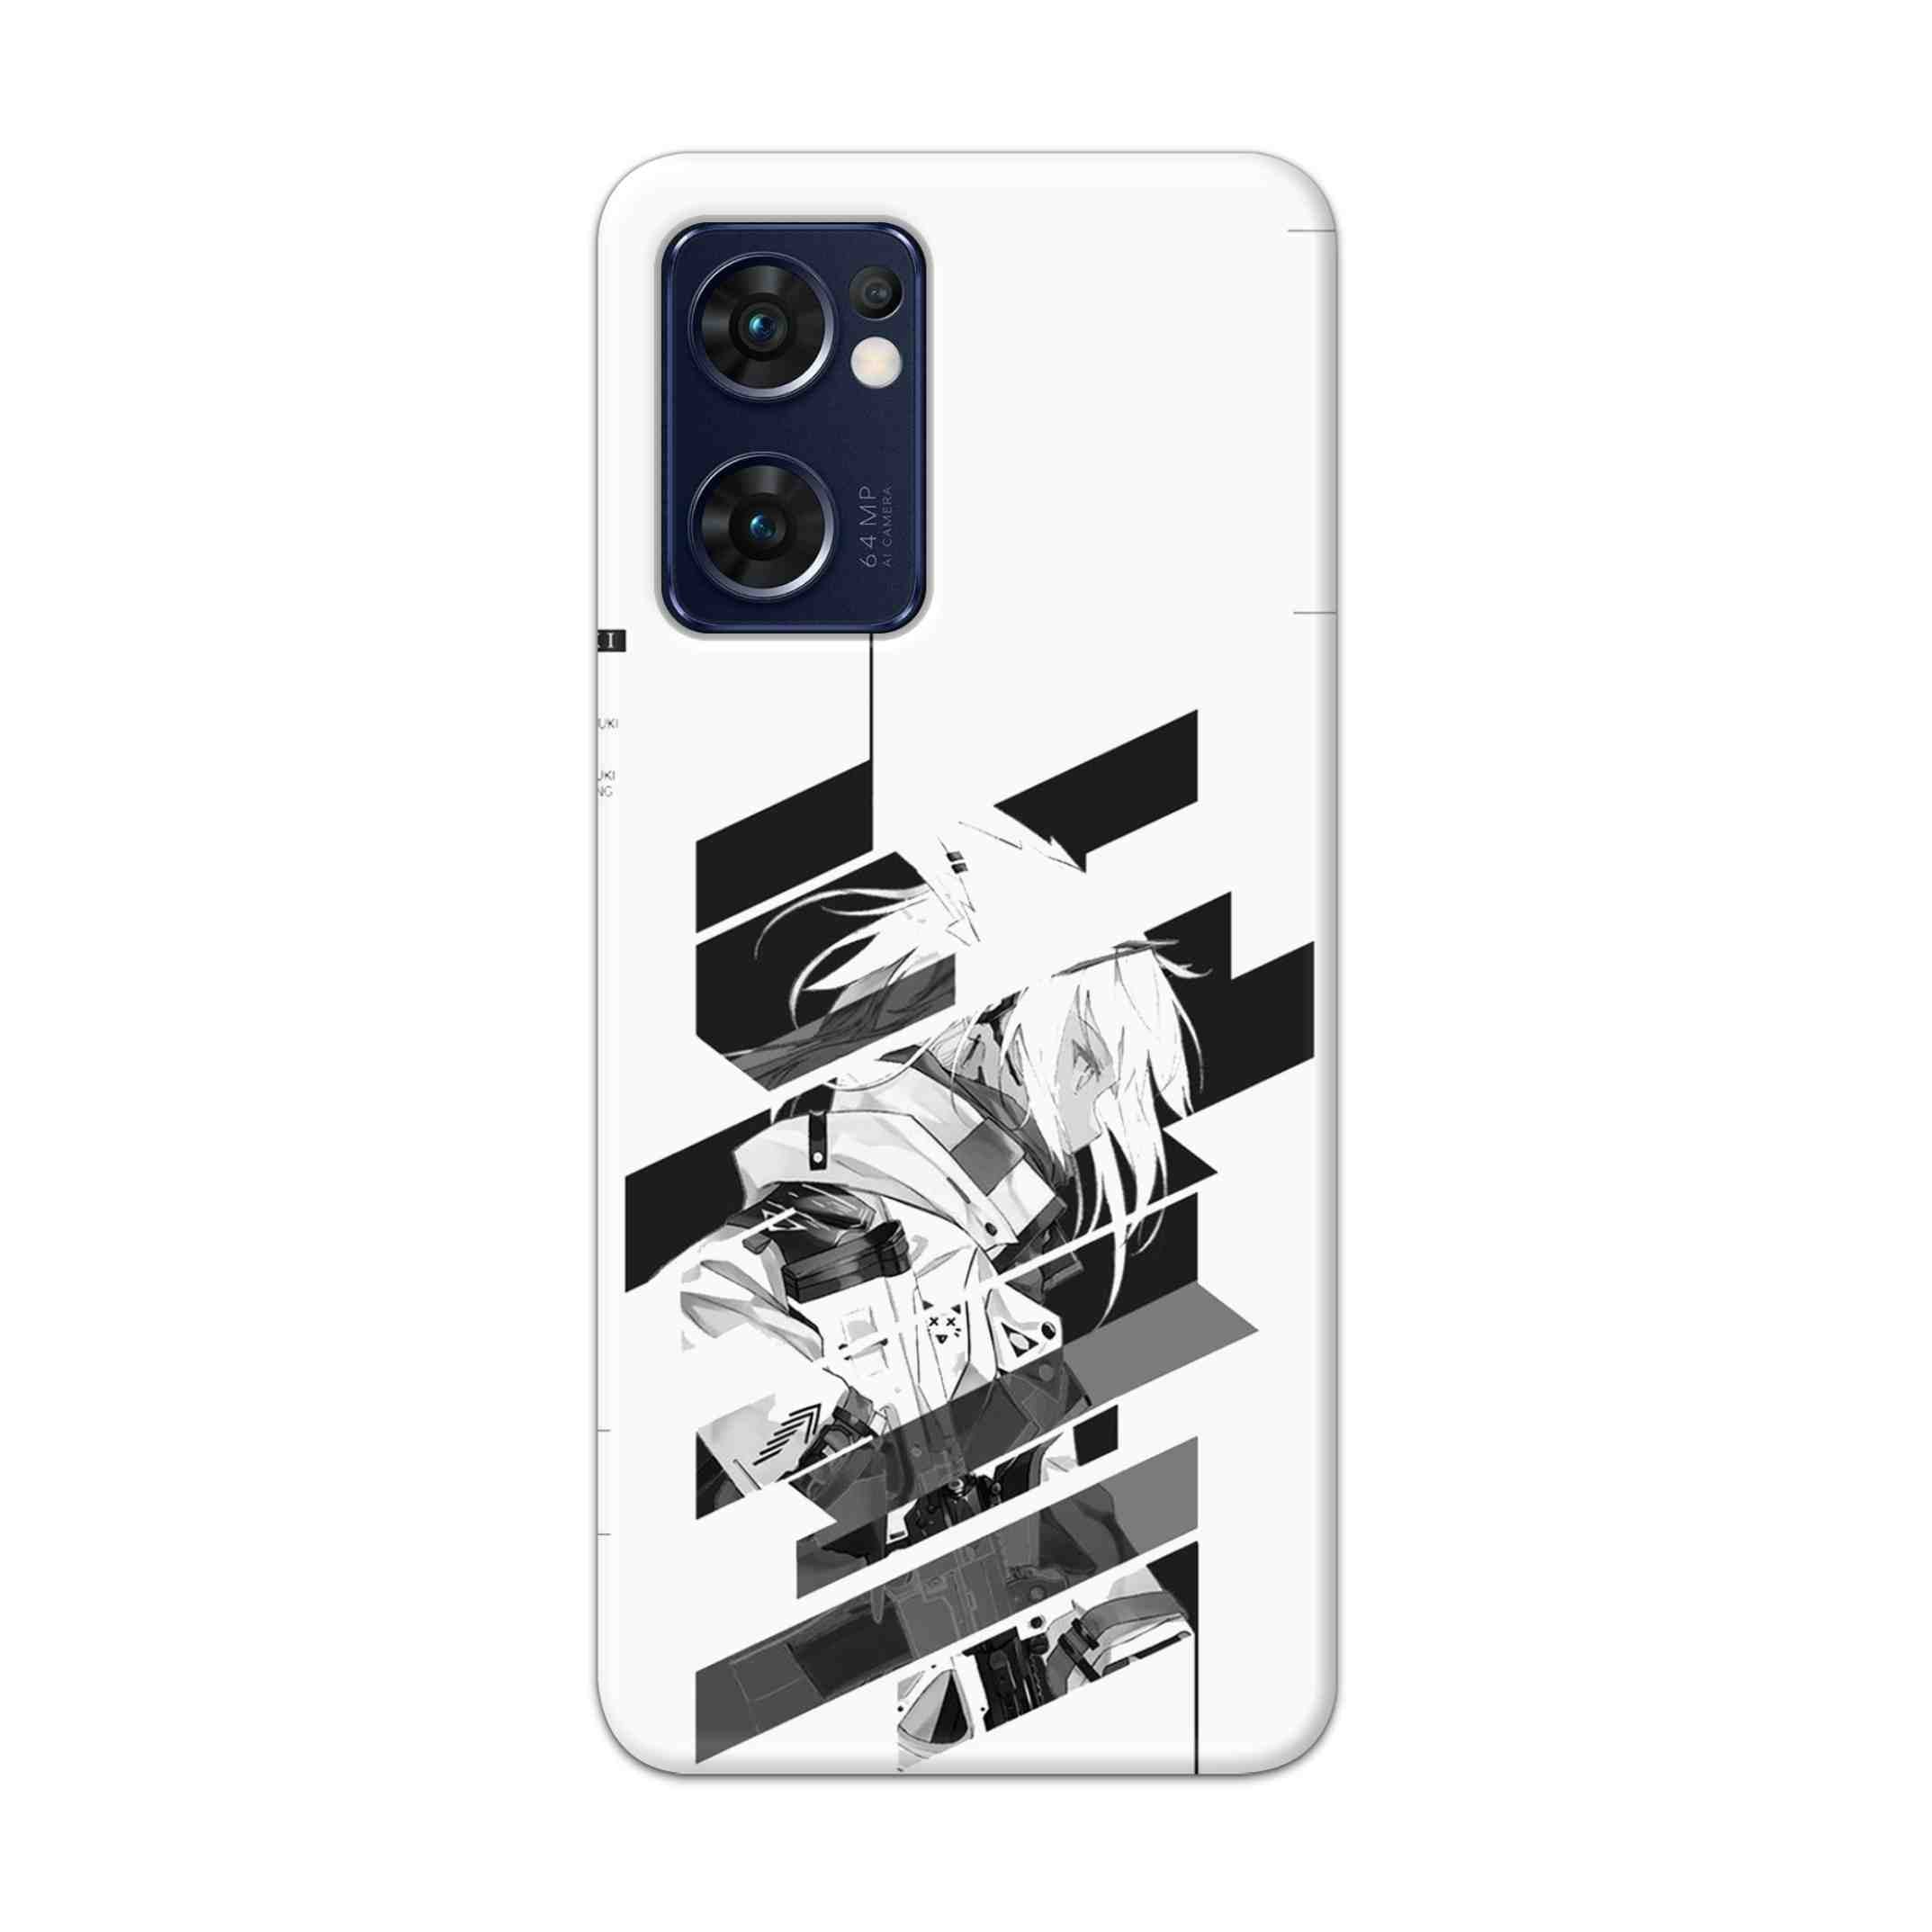 Buy Fubuki Hard Back Mobile Phone Case Cover For Reno 7 5G Online